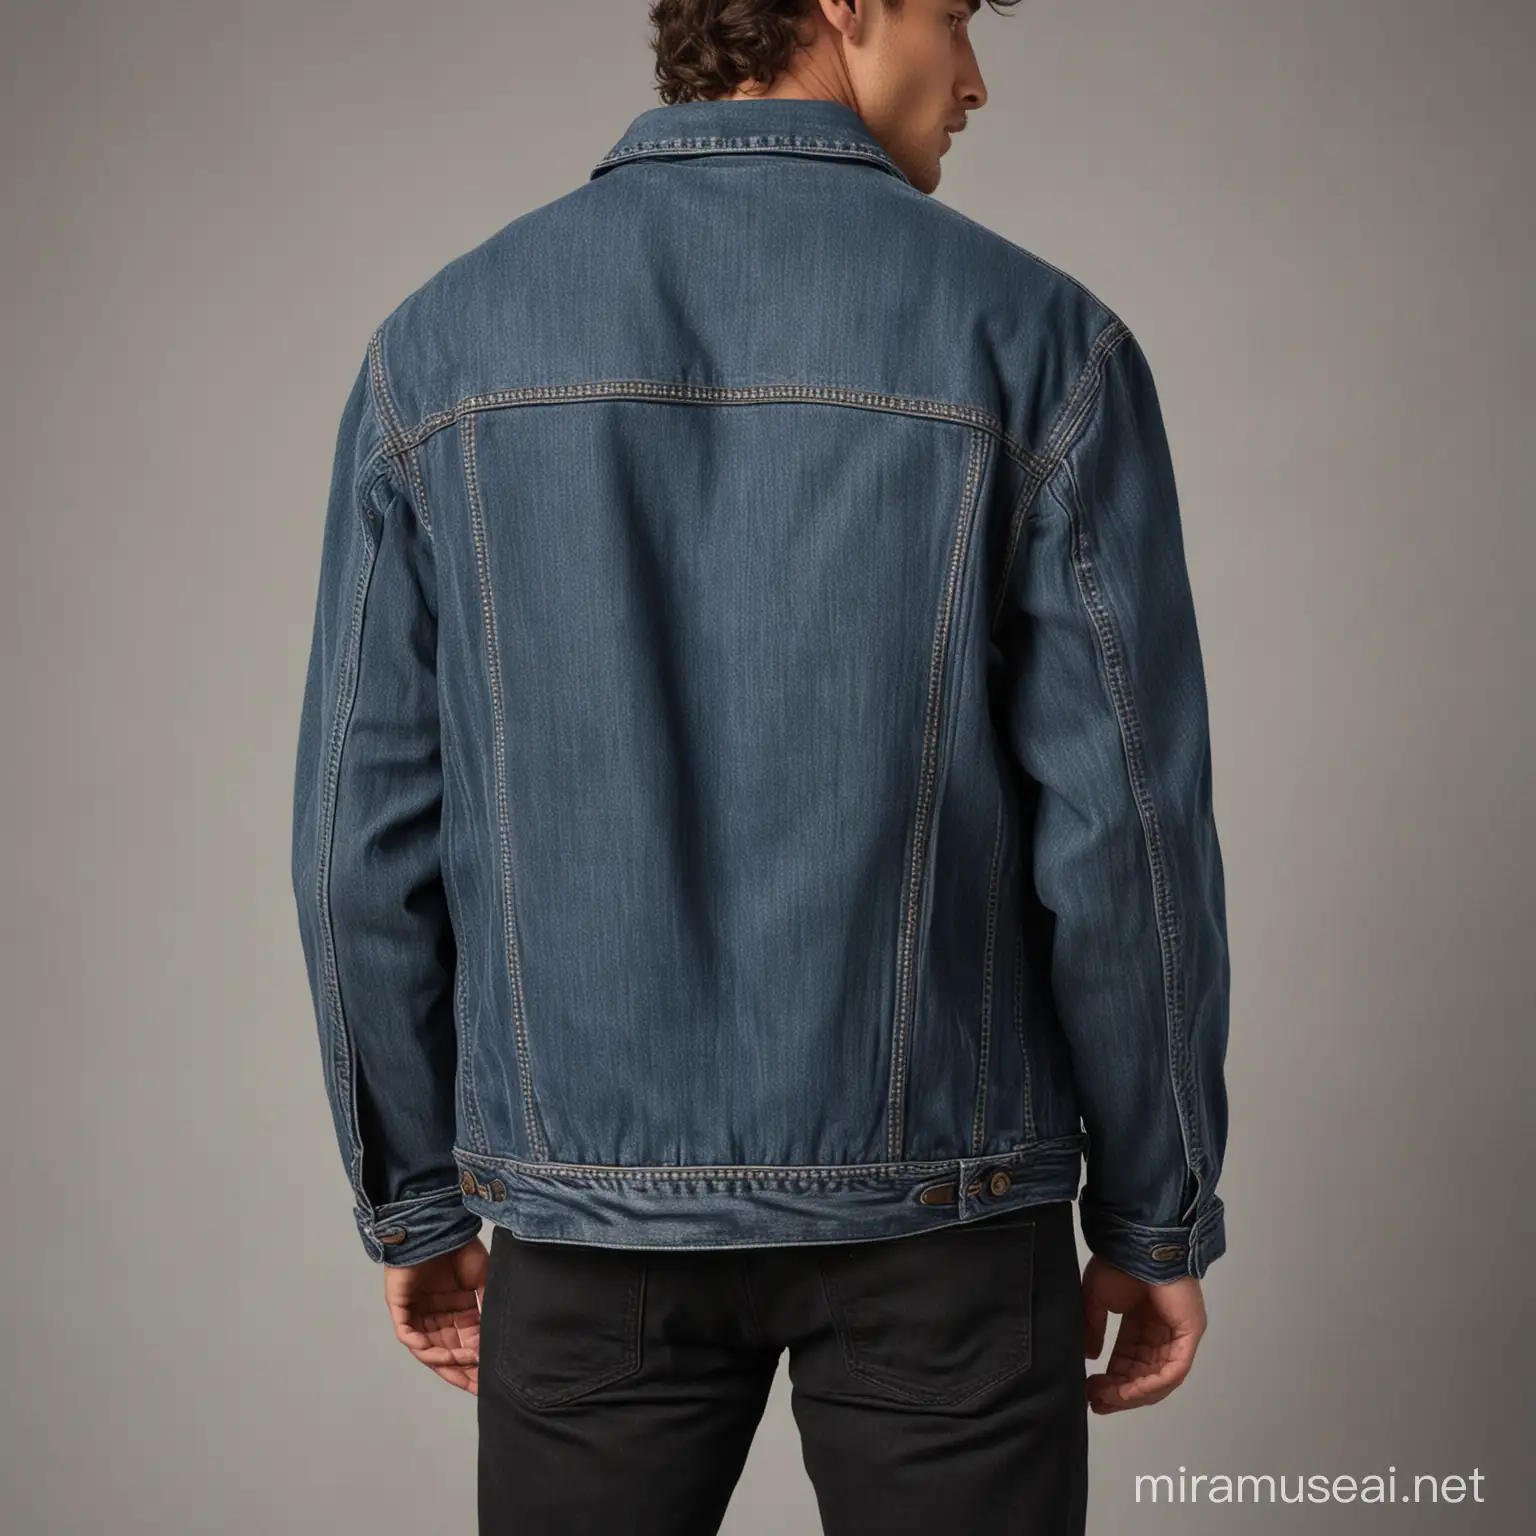 Stylish Denim Jacket Back View with Distinctive Details